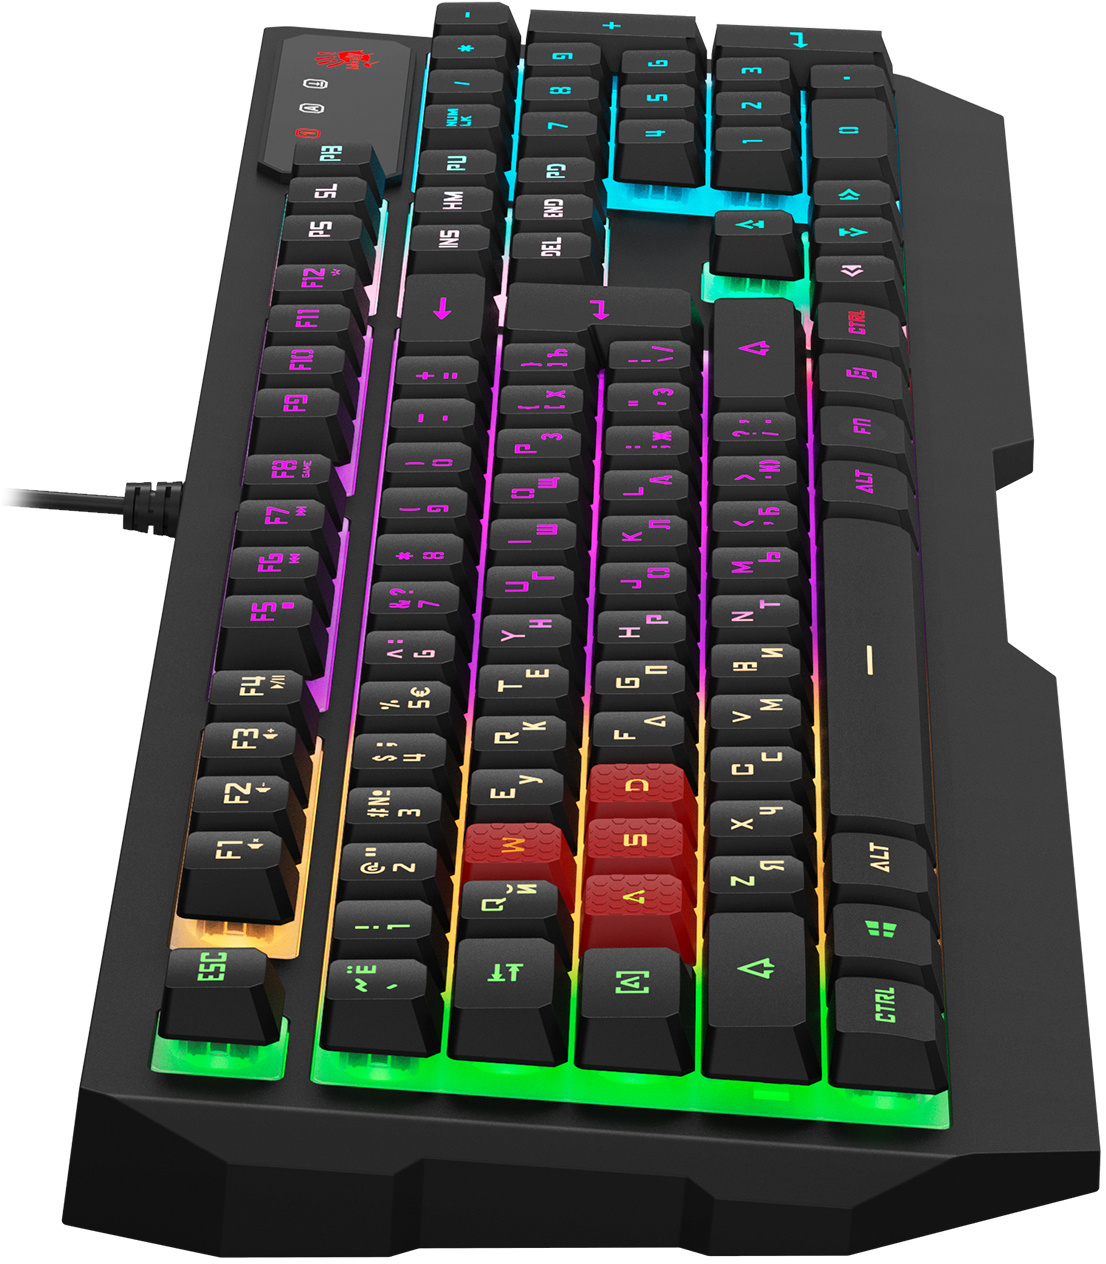 Клавиатура + мышь A4Tech Bloody B1700 клав:черный мышь:черный USB LED (B1700 ( B140N +ES7 + BP-50M))